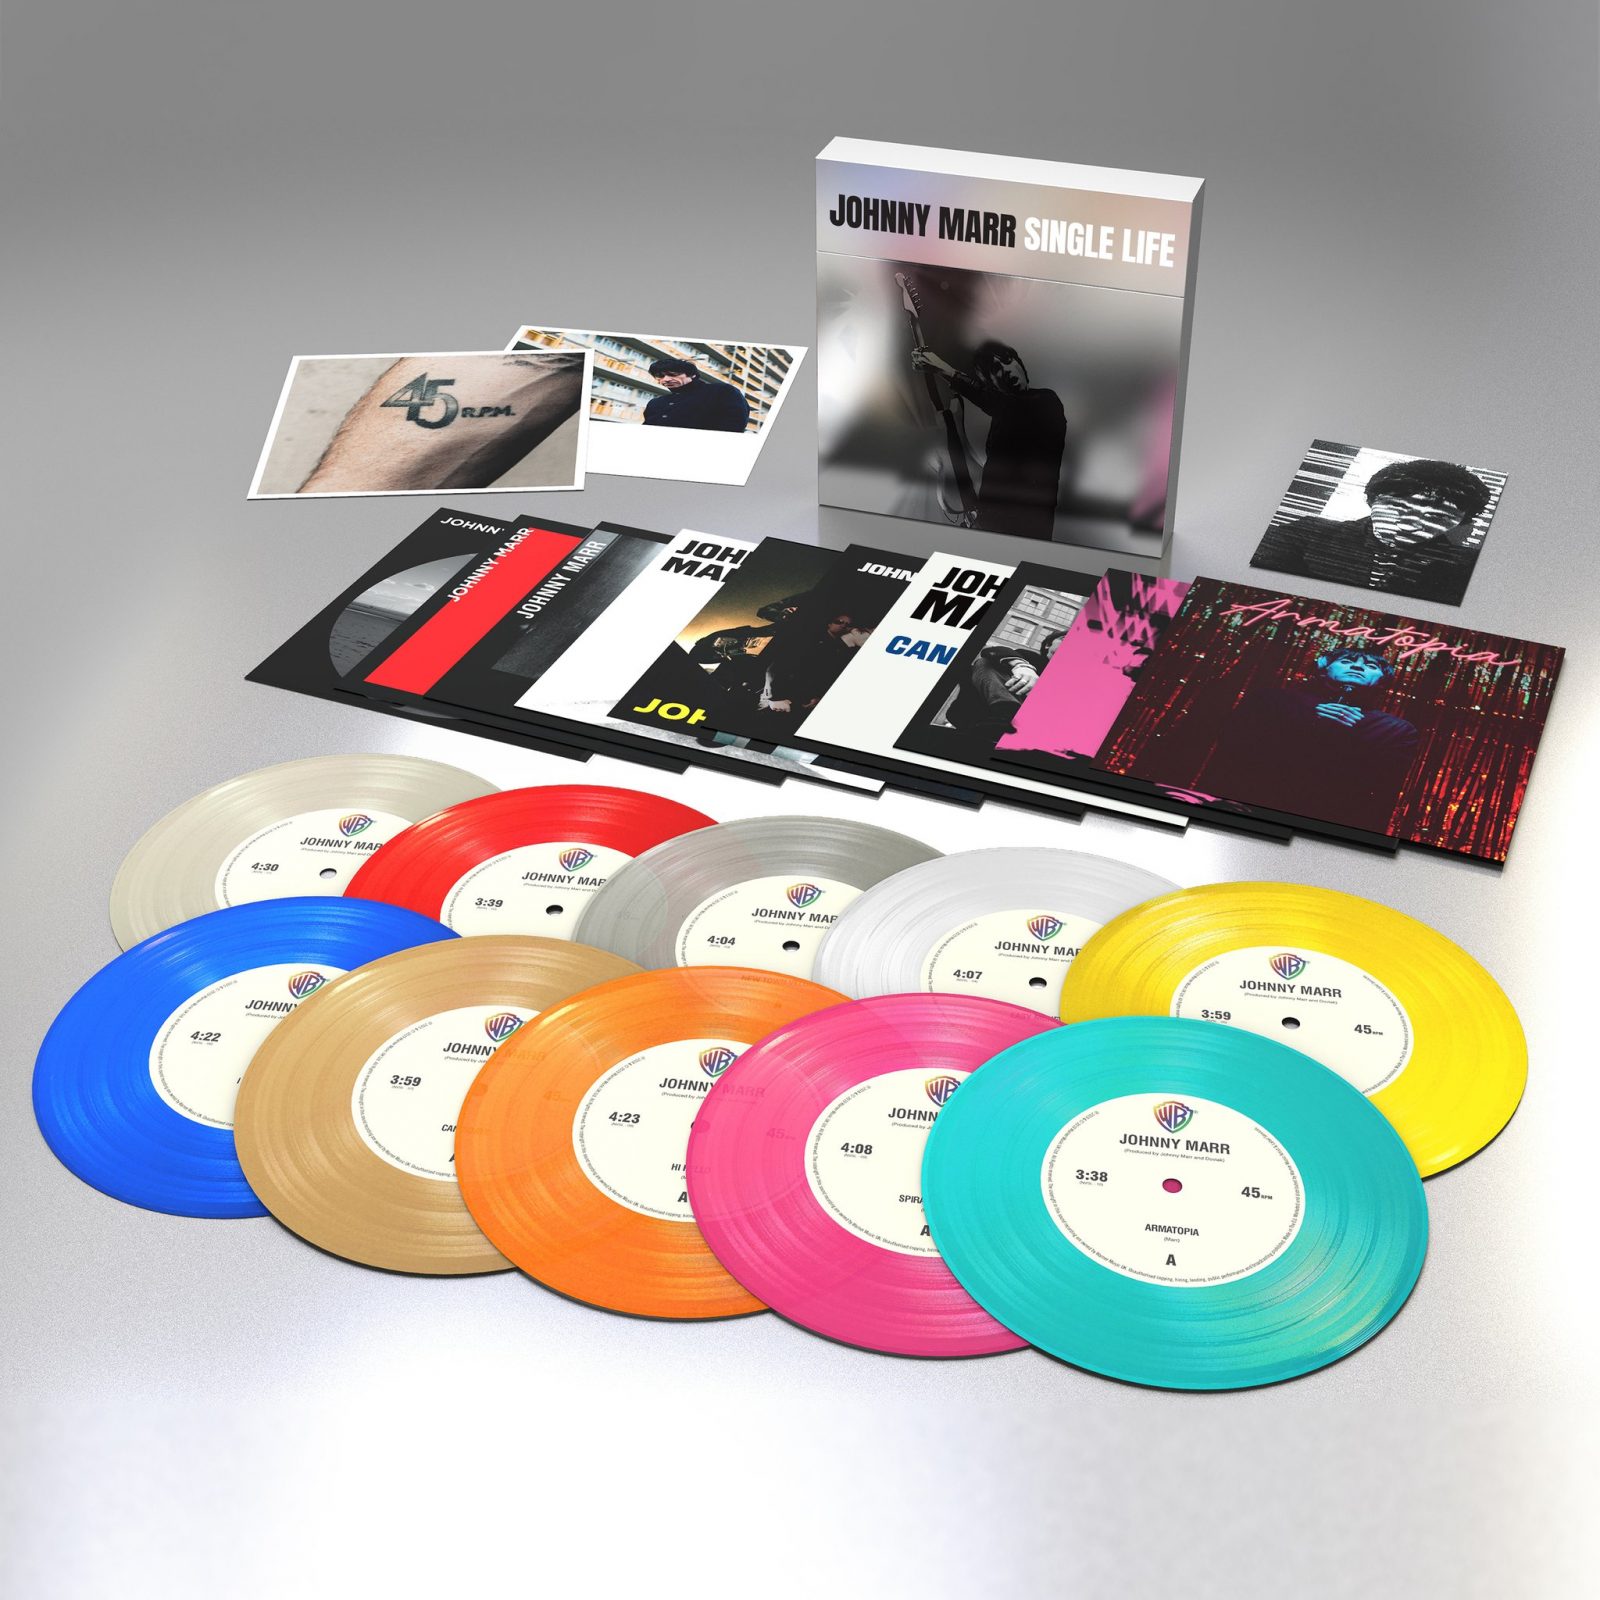 News – Johnny Marr – Single Life – Limited Edition 7” Box